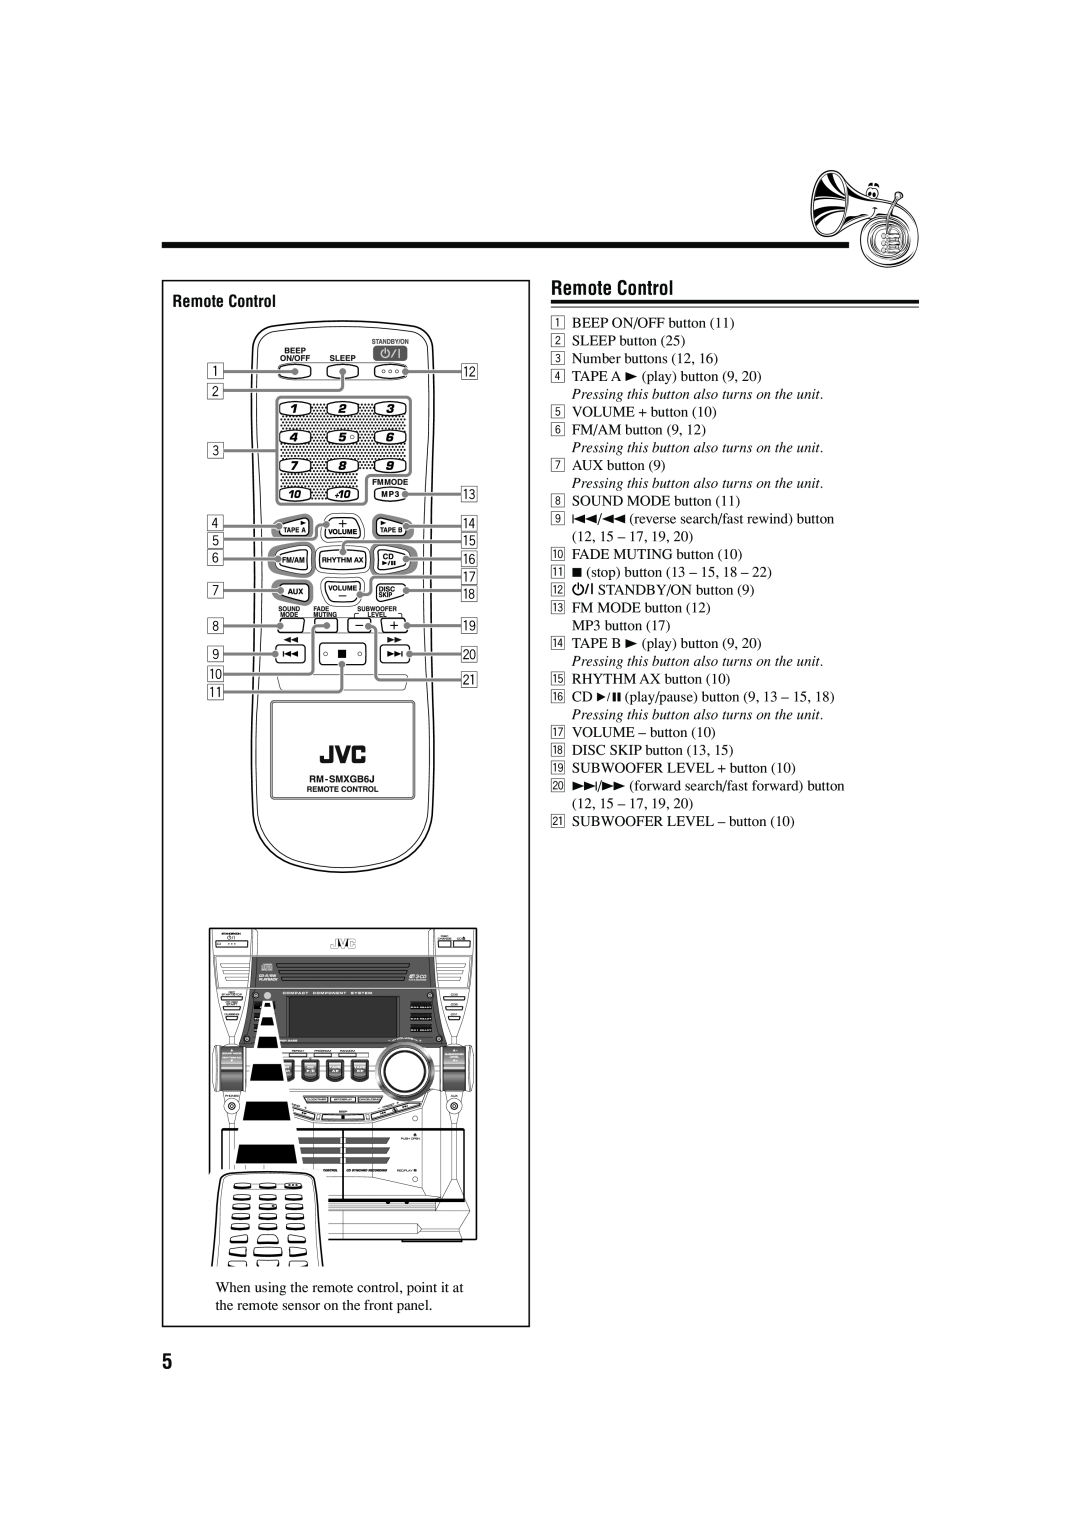 JVC MX-GB5C manual Remote Control 